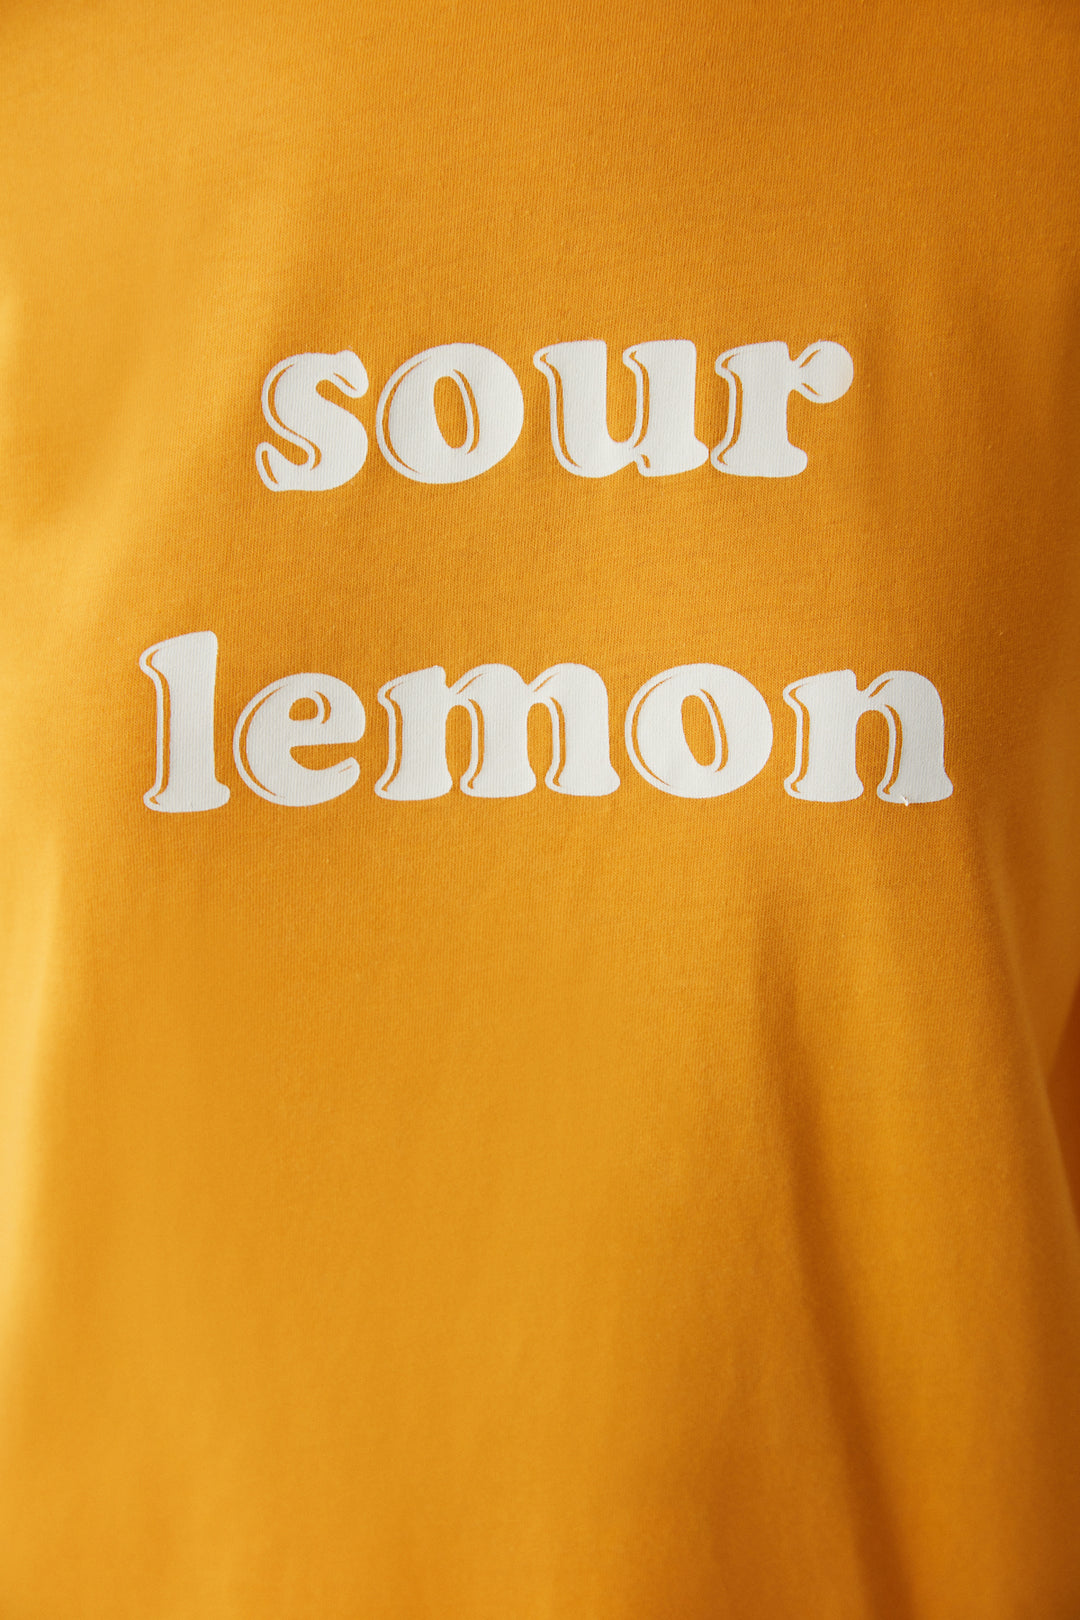 Base Sour Lemon Ls Pant Set